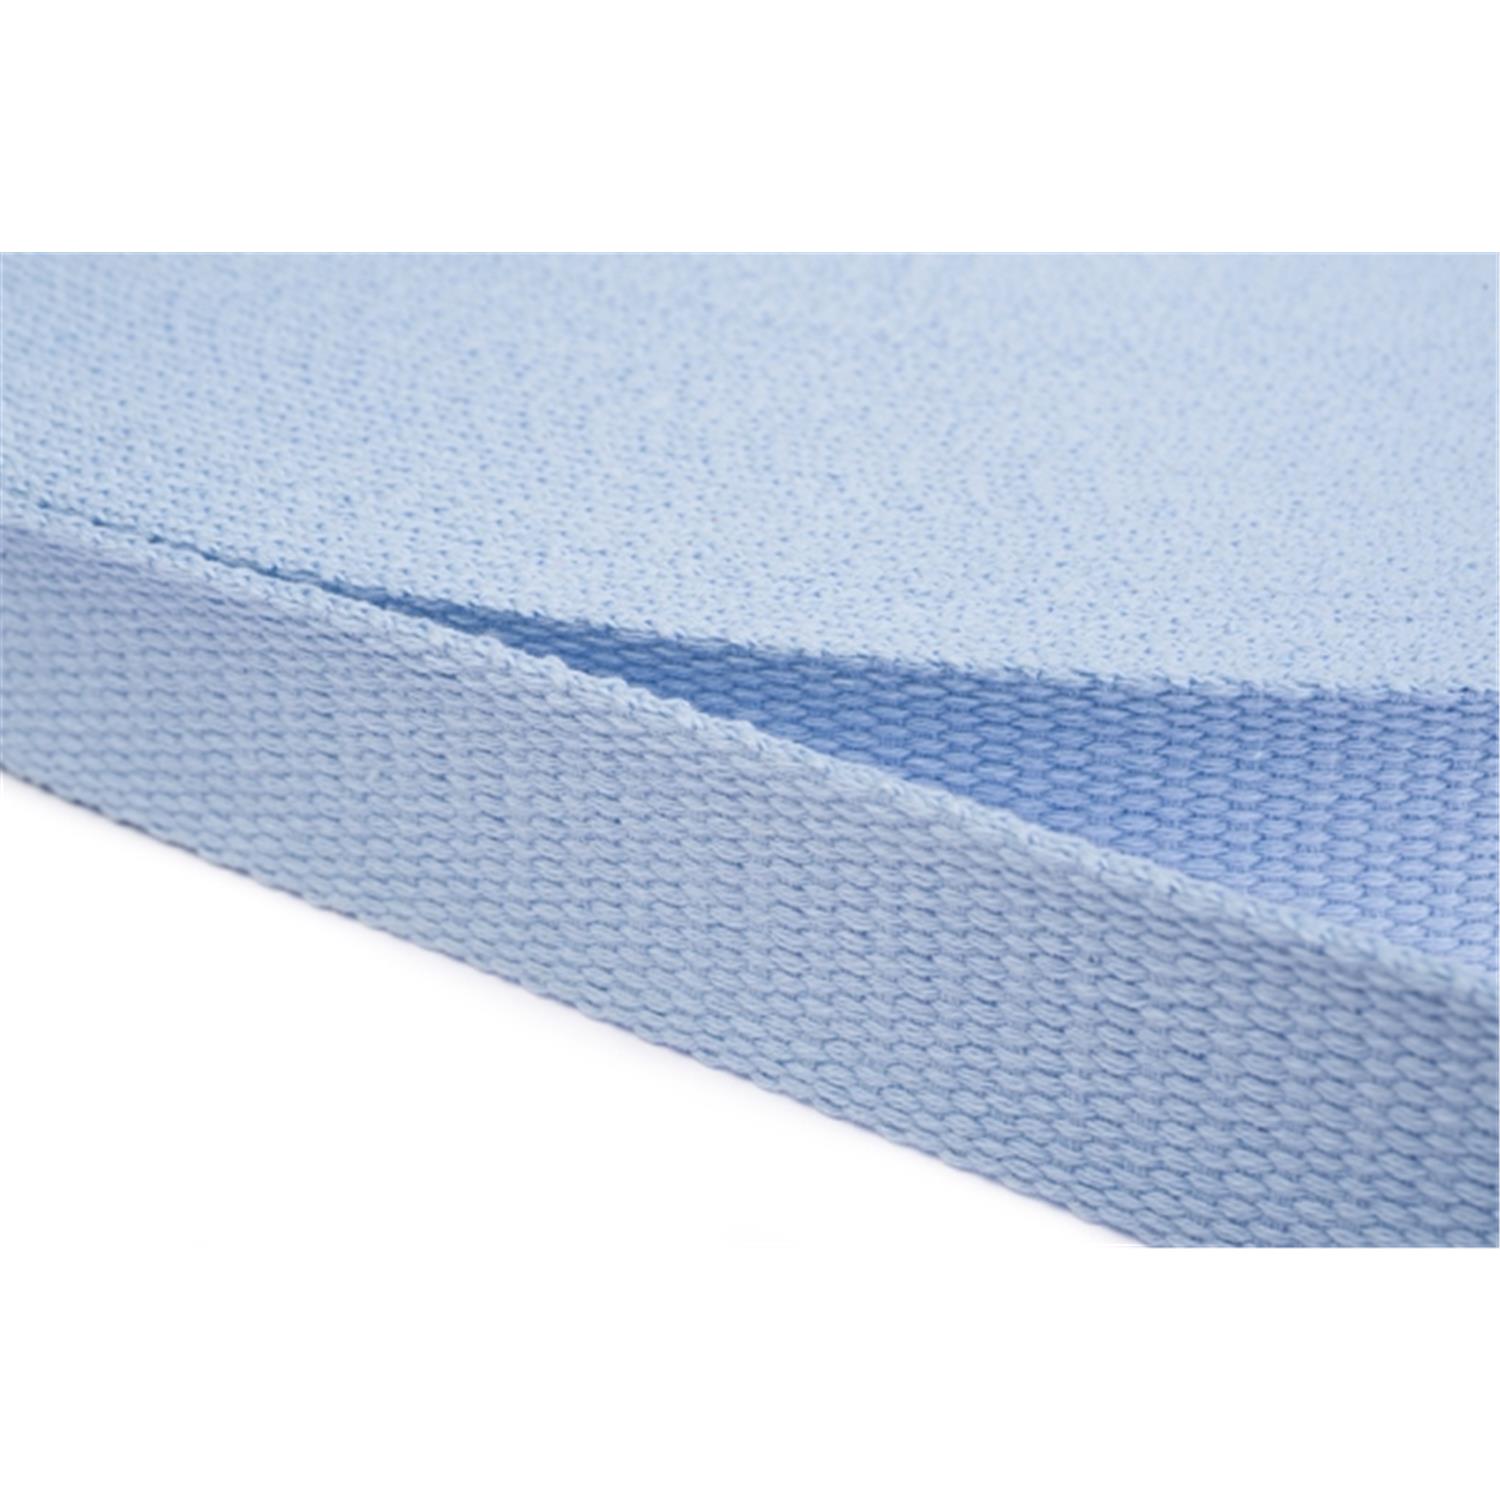 Gurtband aus Baumwolle 30mm in 20 Farben 11 - hellblau 6 Meter